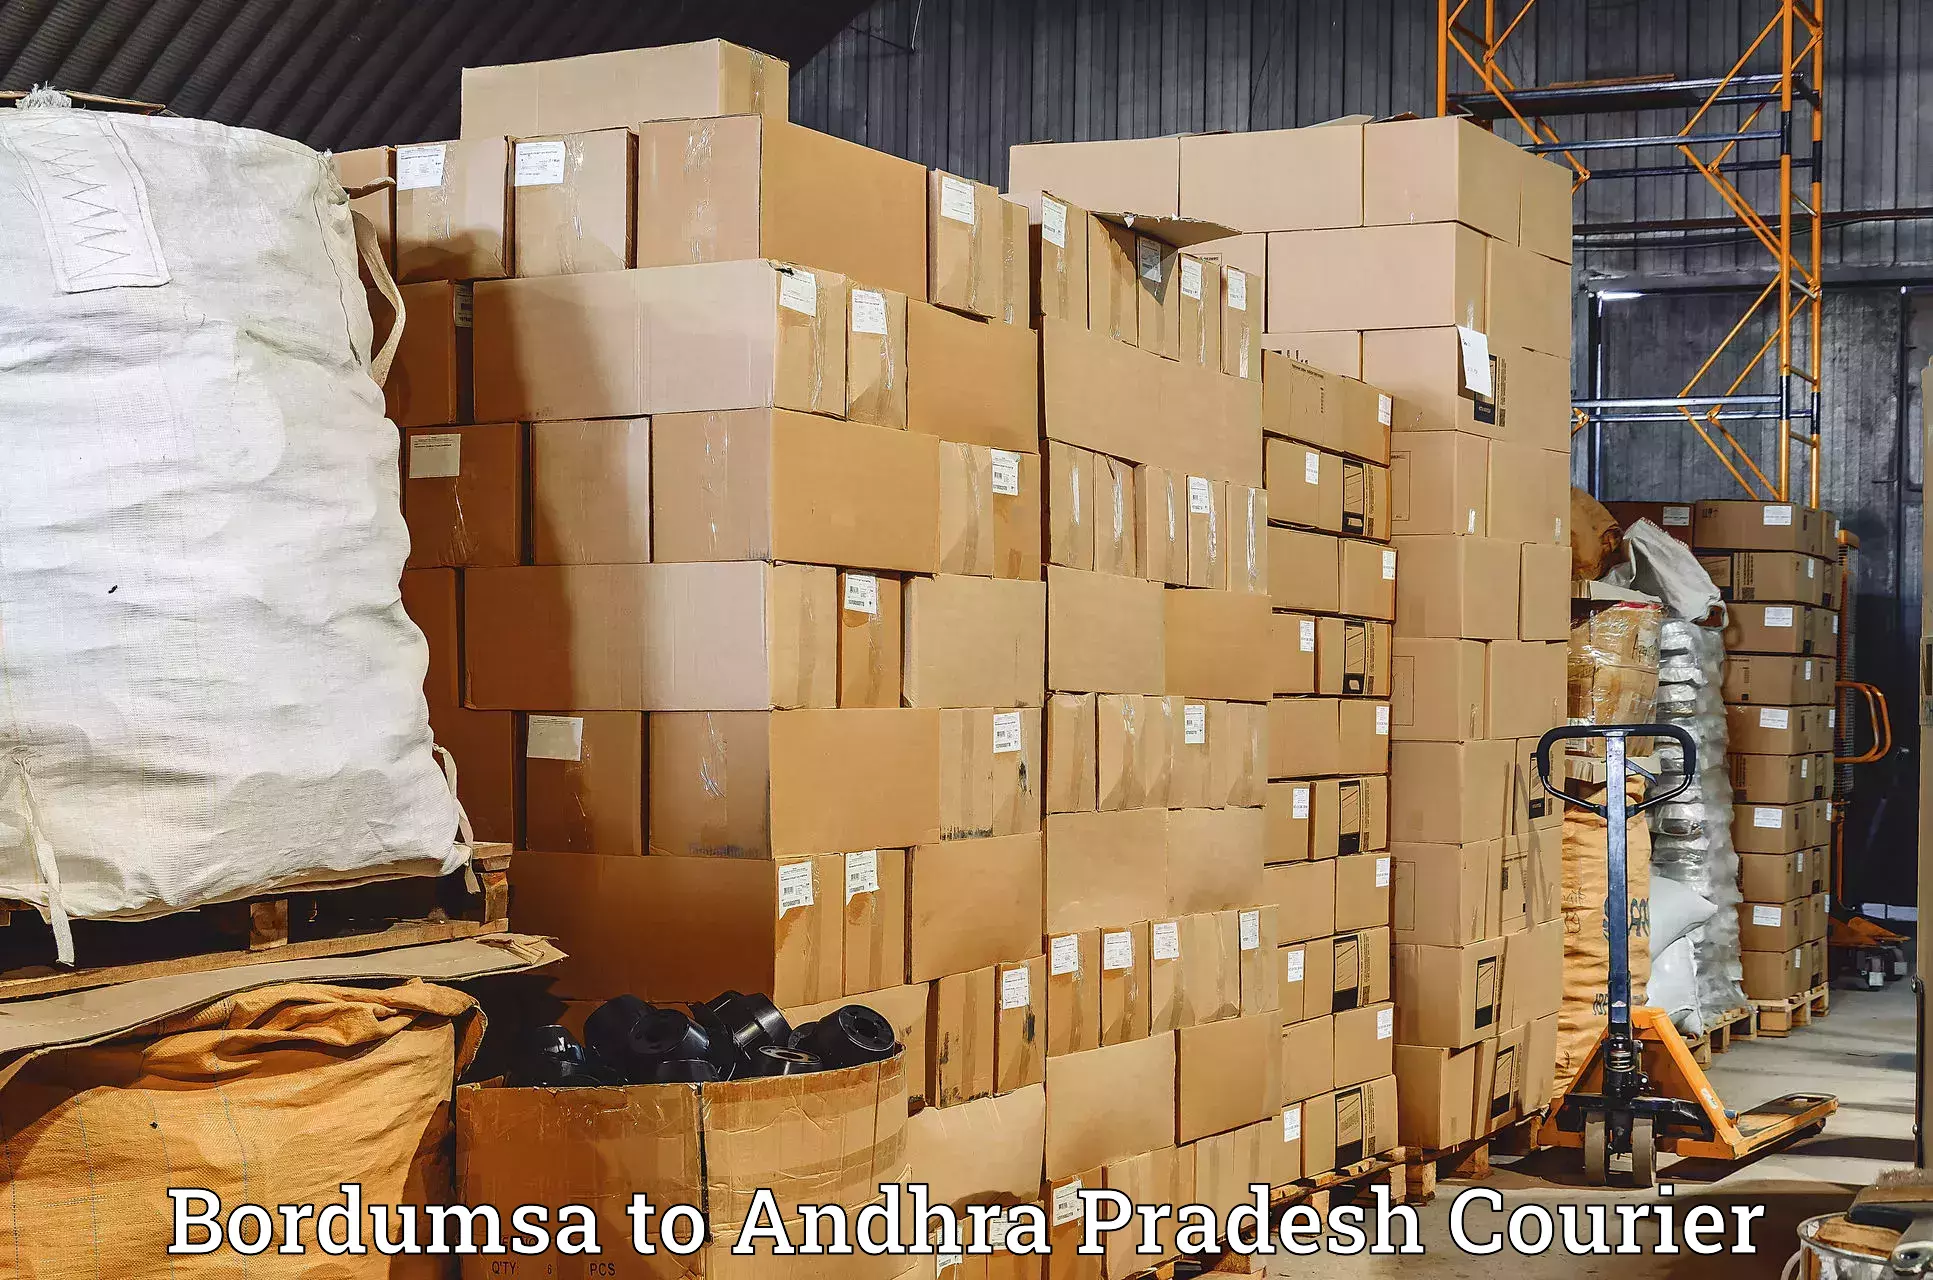 Professional courier handling Bordumsa to Tripuranthakam